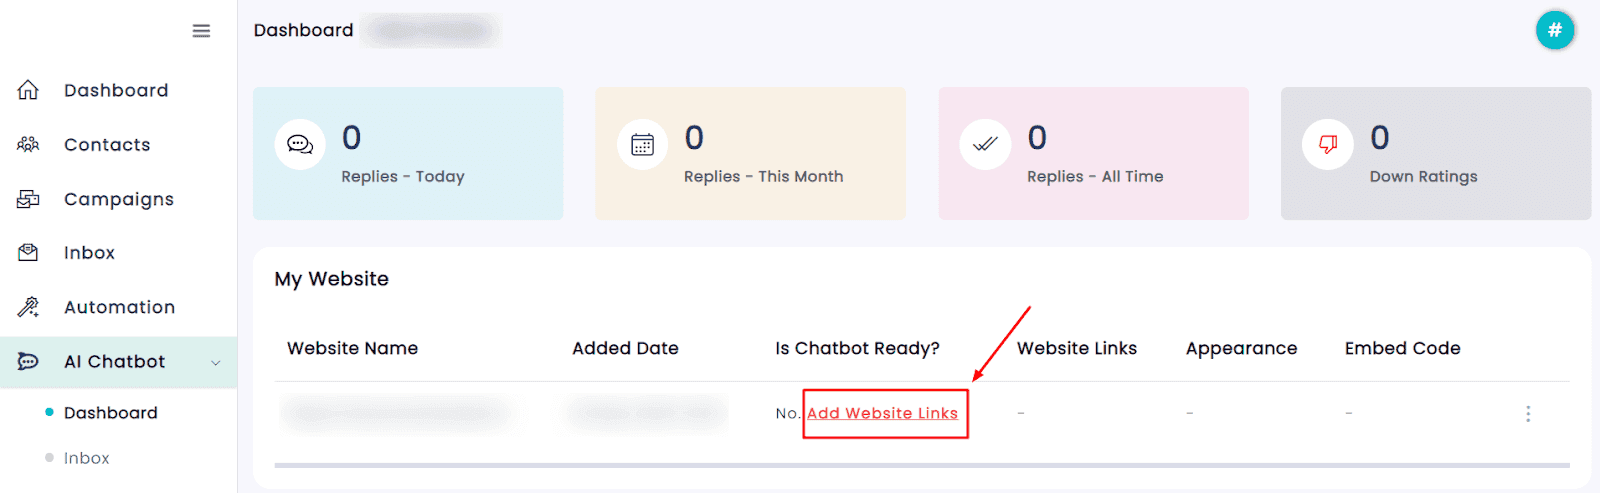 robofy chatbot dashboard